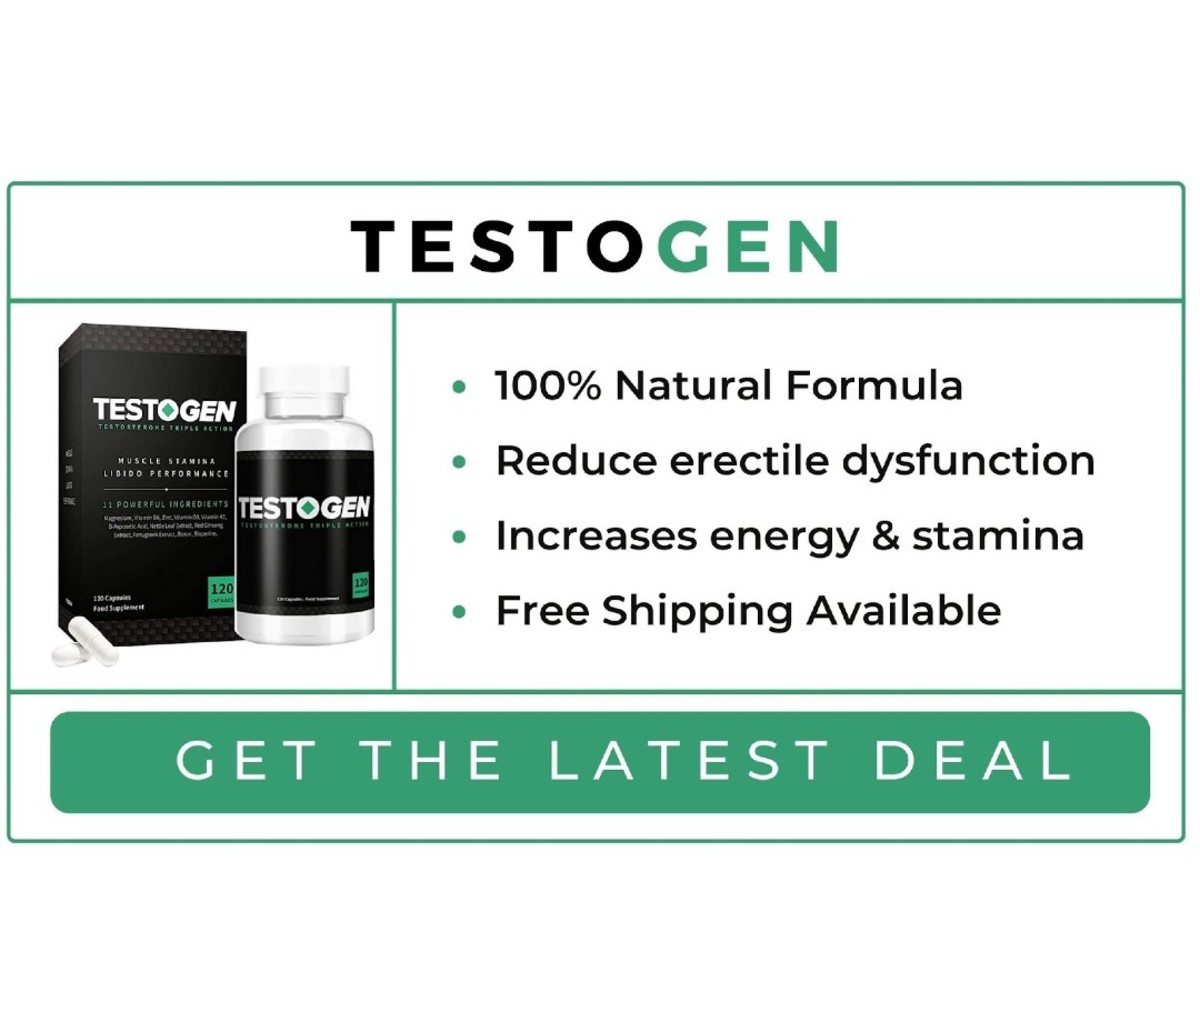 Testogen: Most Popular Testosterone Supplement for Weight Loss